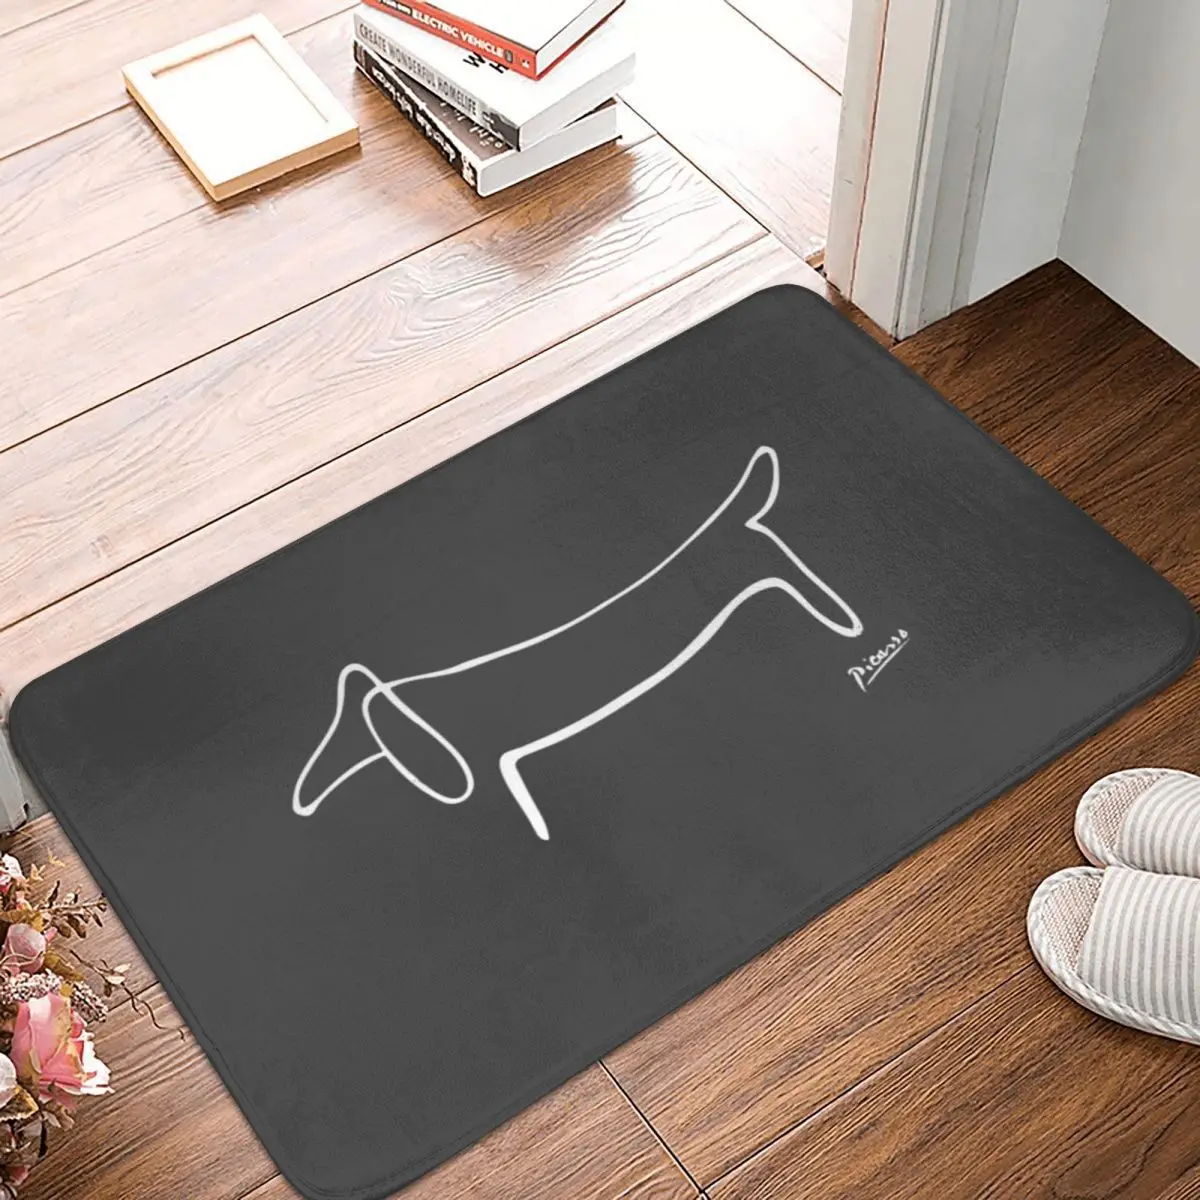 

Pablo Picasso Wild Wiener Dog Dachshund Doormat Rug Carpet Mat Footpad Polyester Non-slip Washable Entrance Kitchen Bedroom